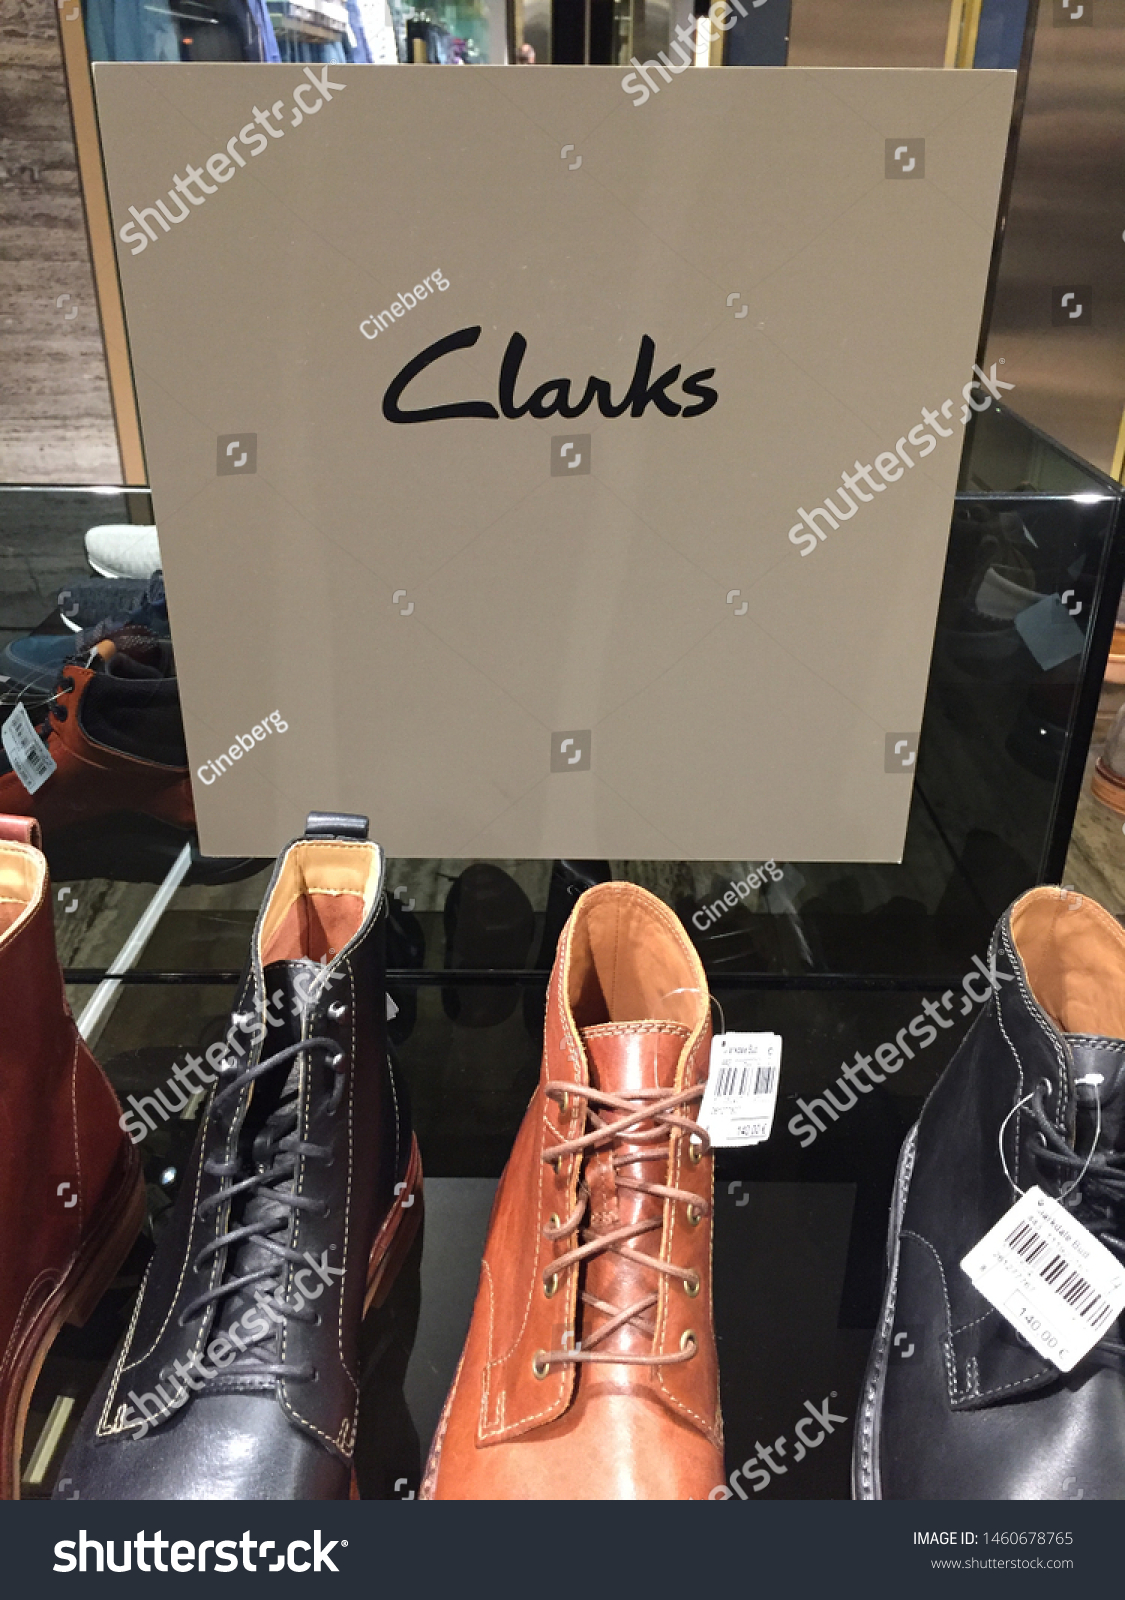 clarks singapore sale 2018